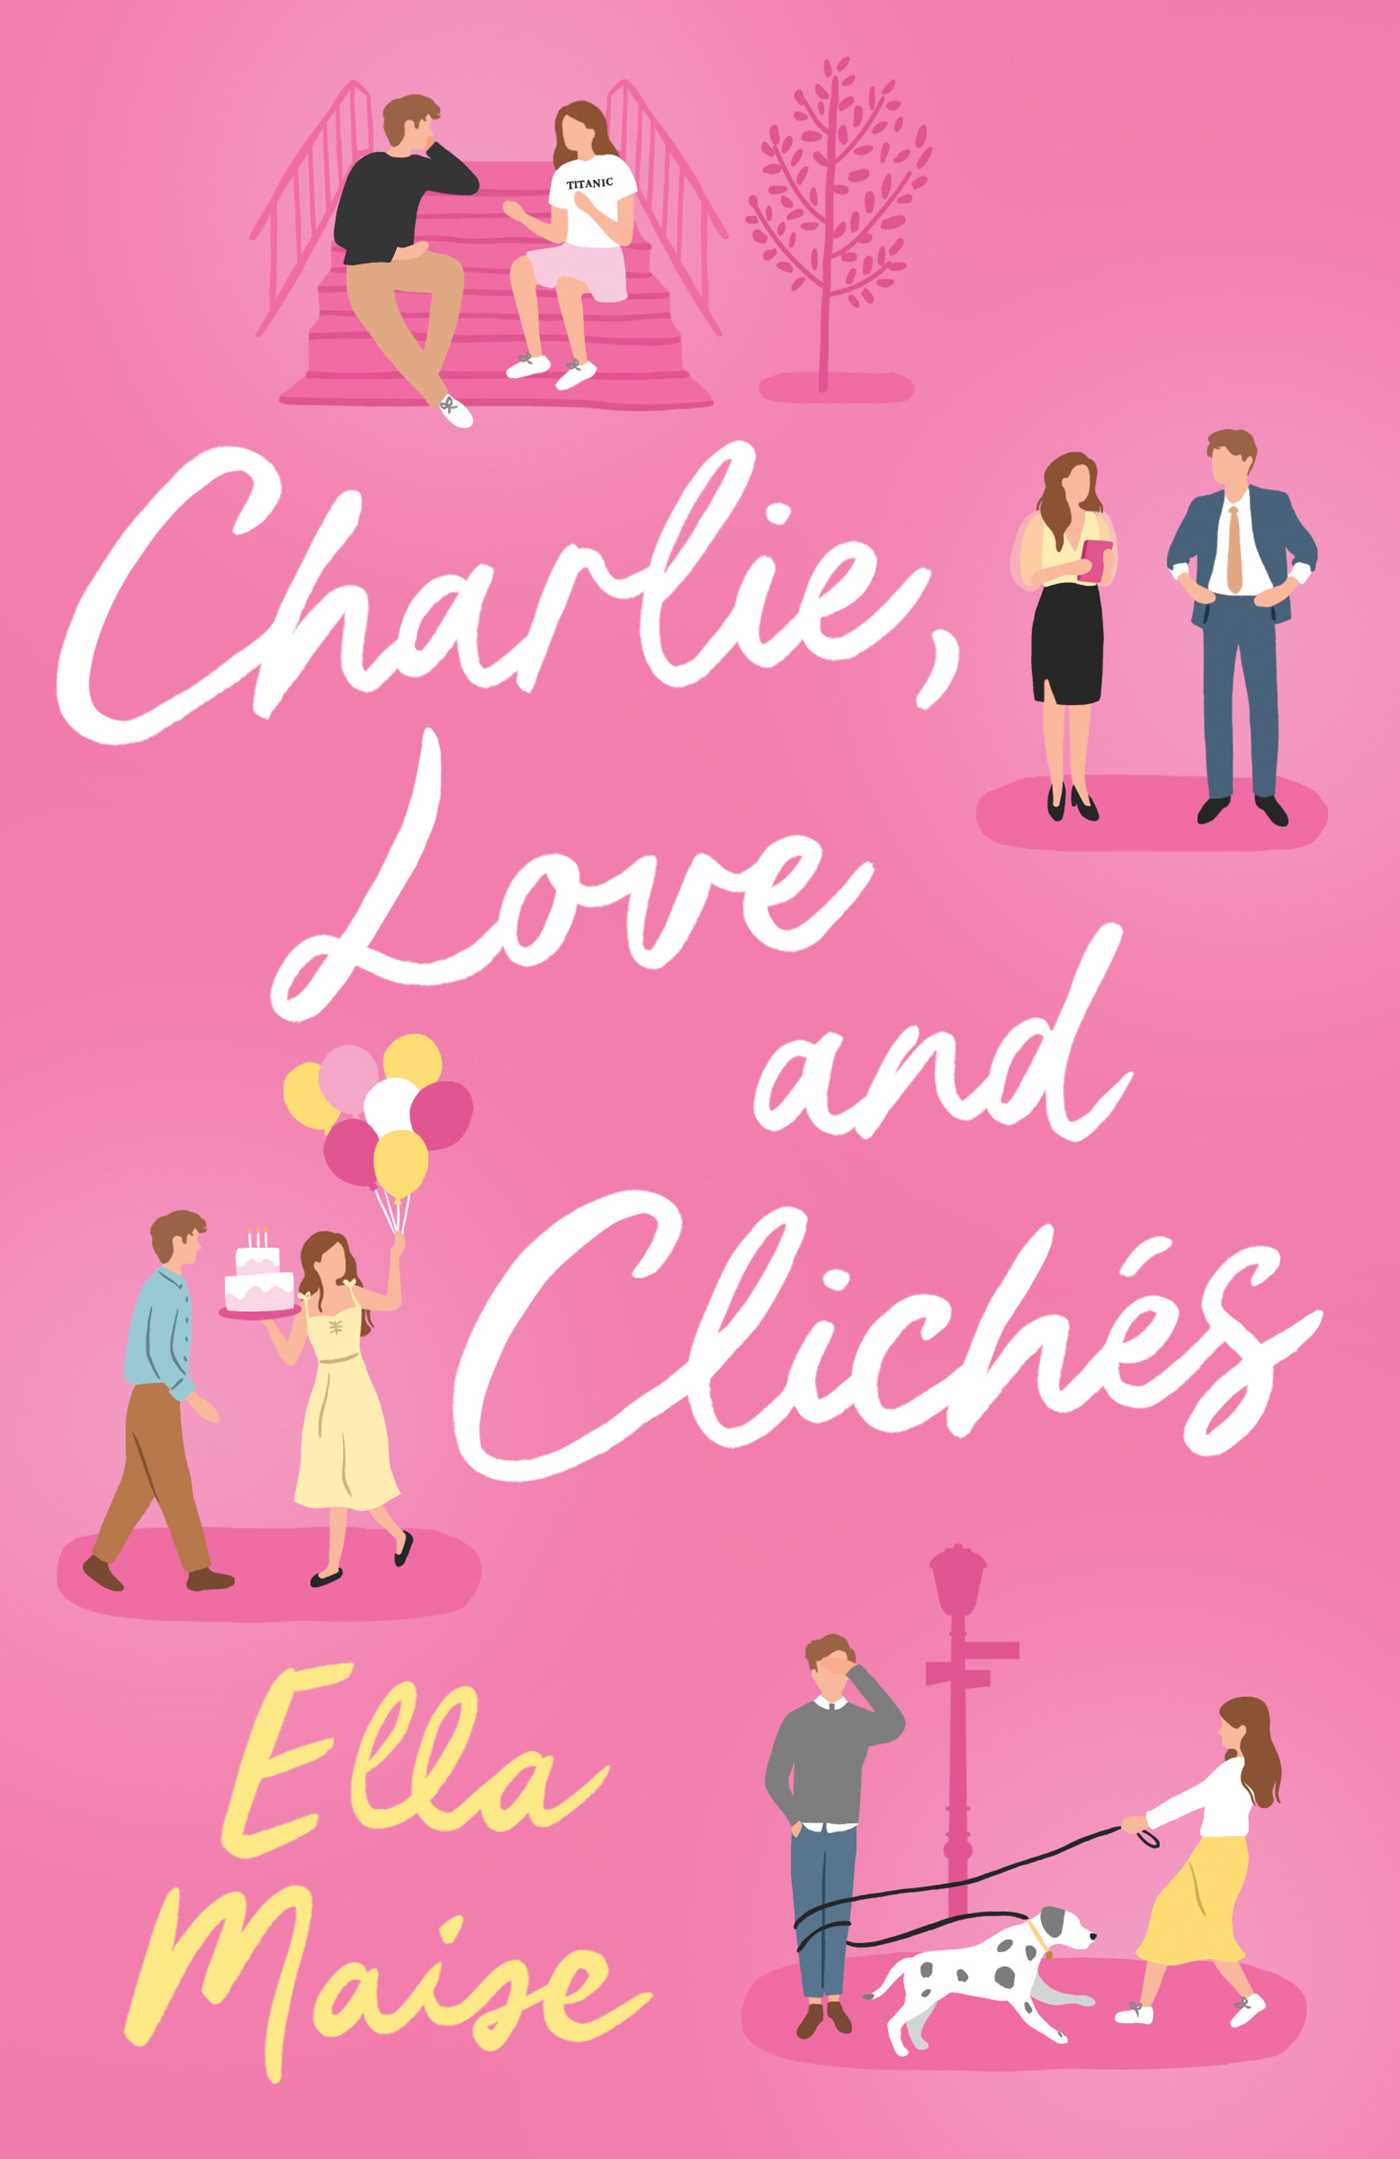 Ella Maise: Charlie Love and Clichés